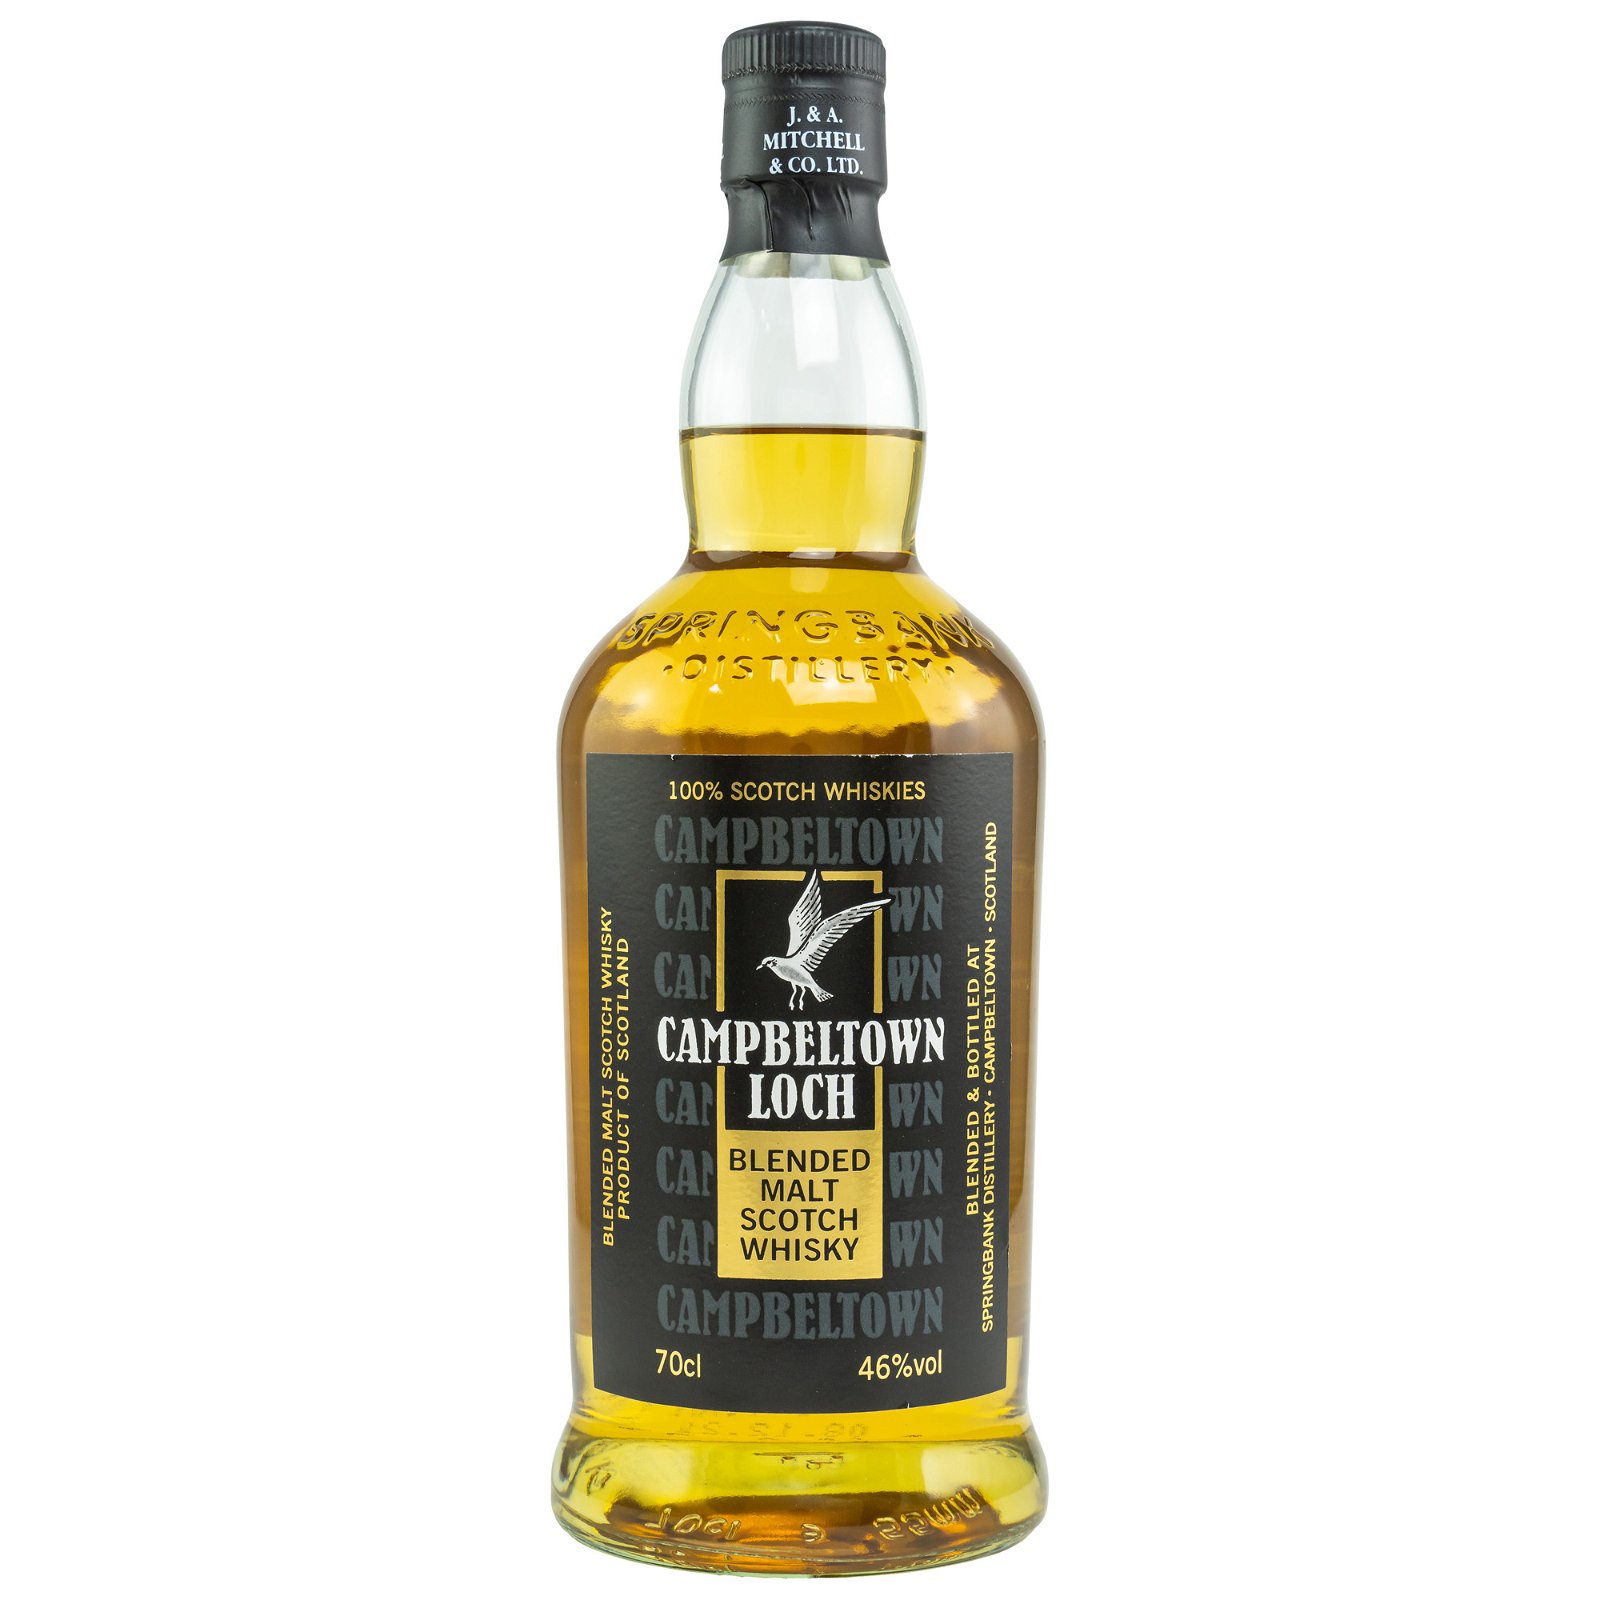 Campbeltown Loch Blended Malt Scotch Whisky Campbeltown